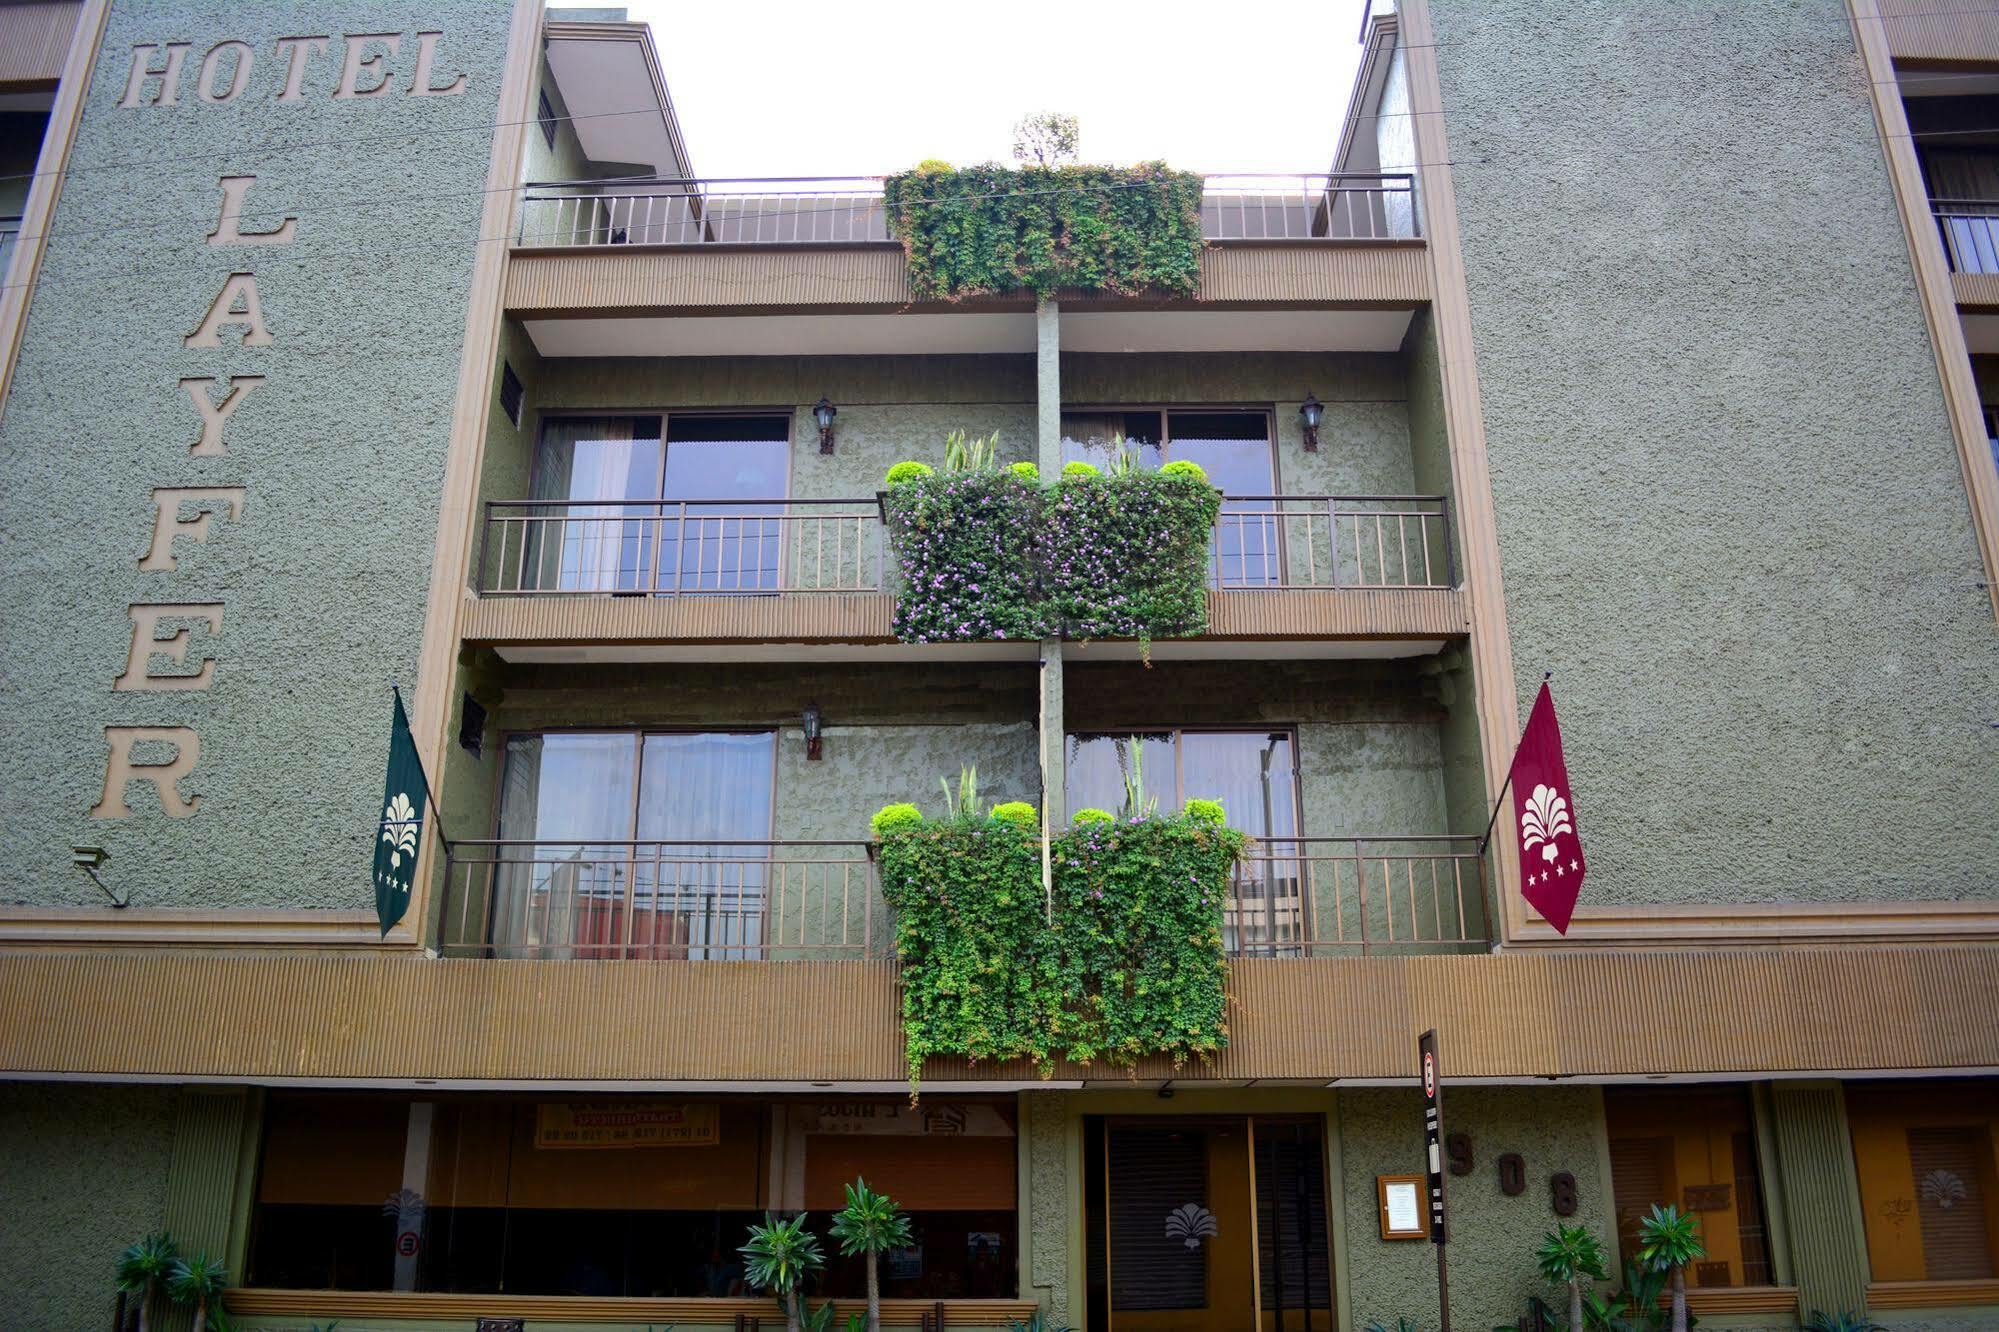 Hotel Layfer Del Centro, Cordoba, Ver Exterior photo